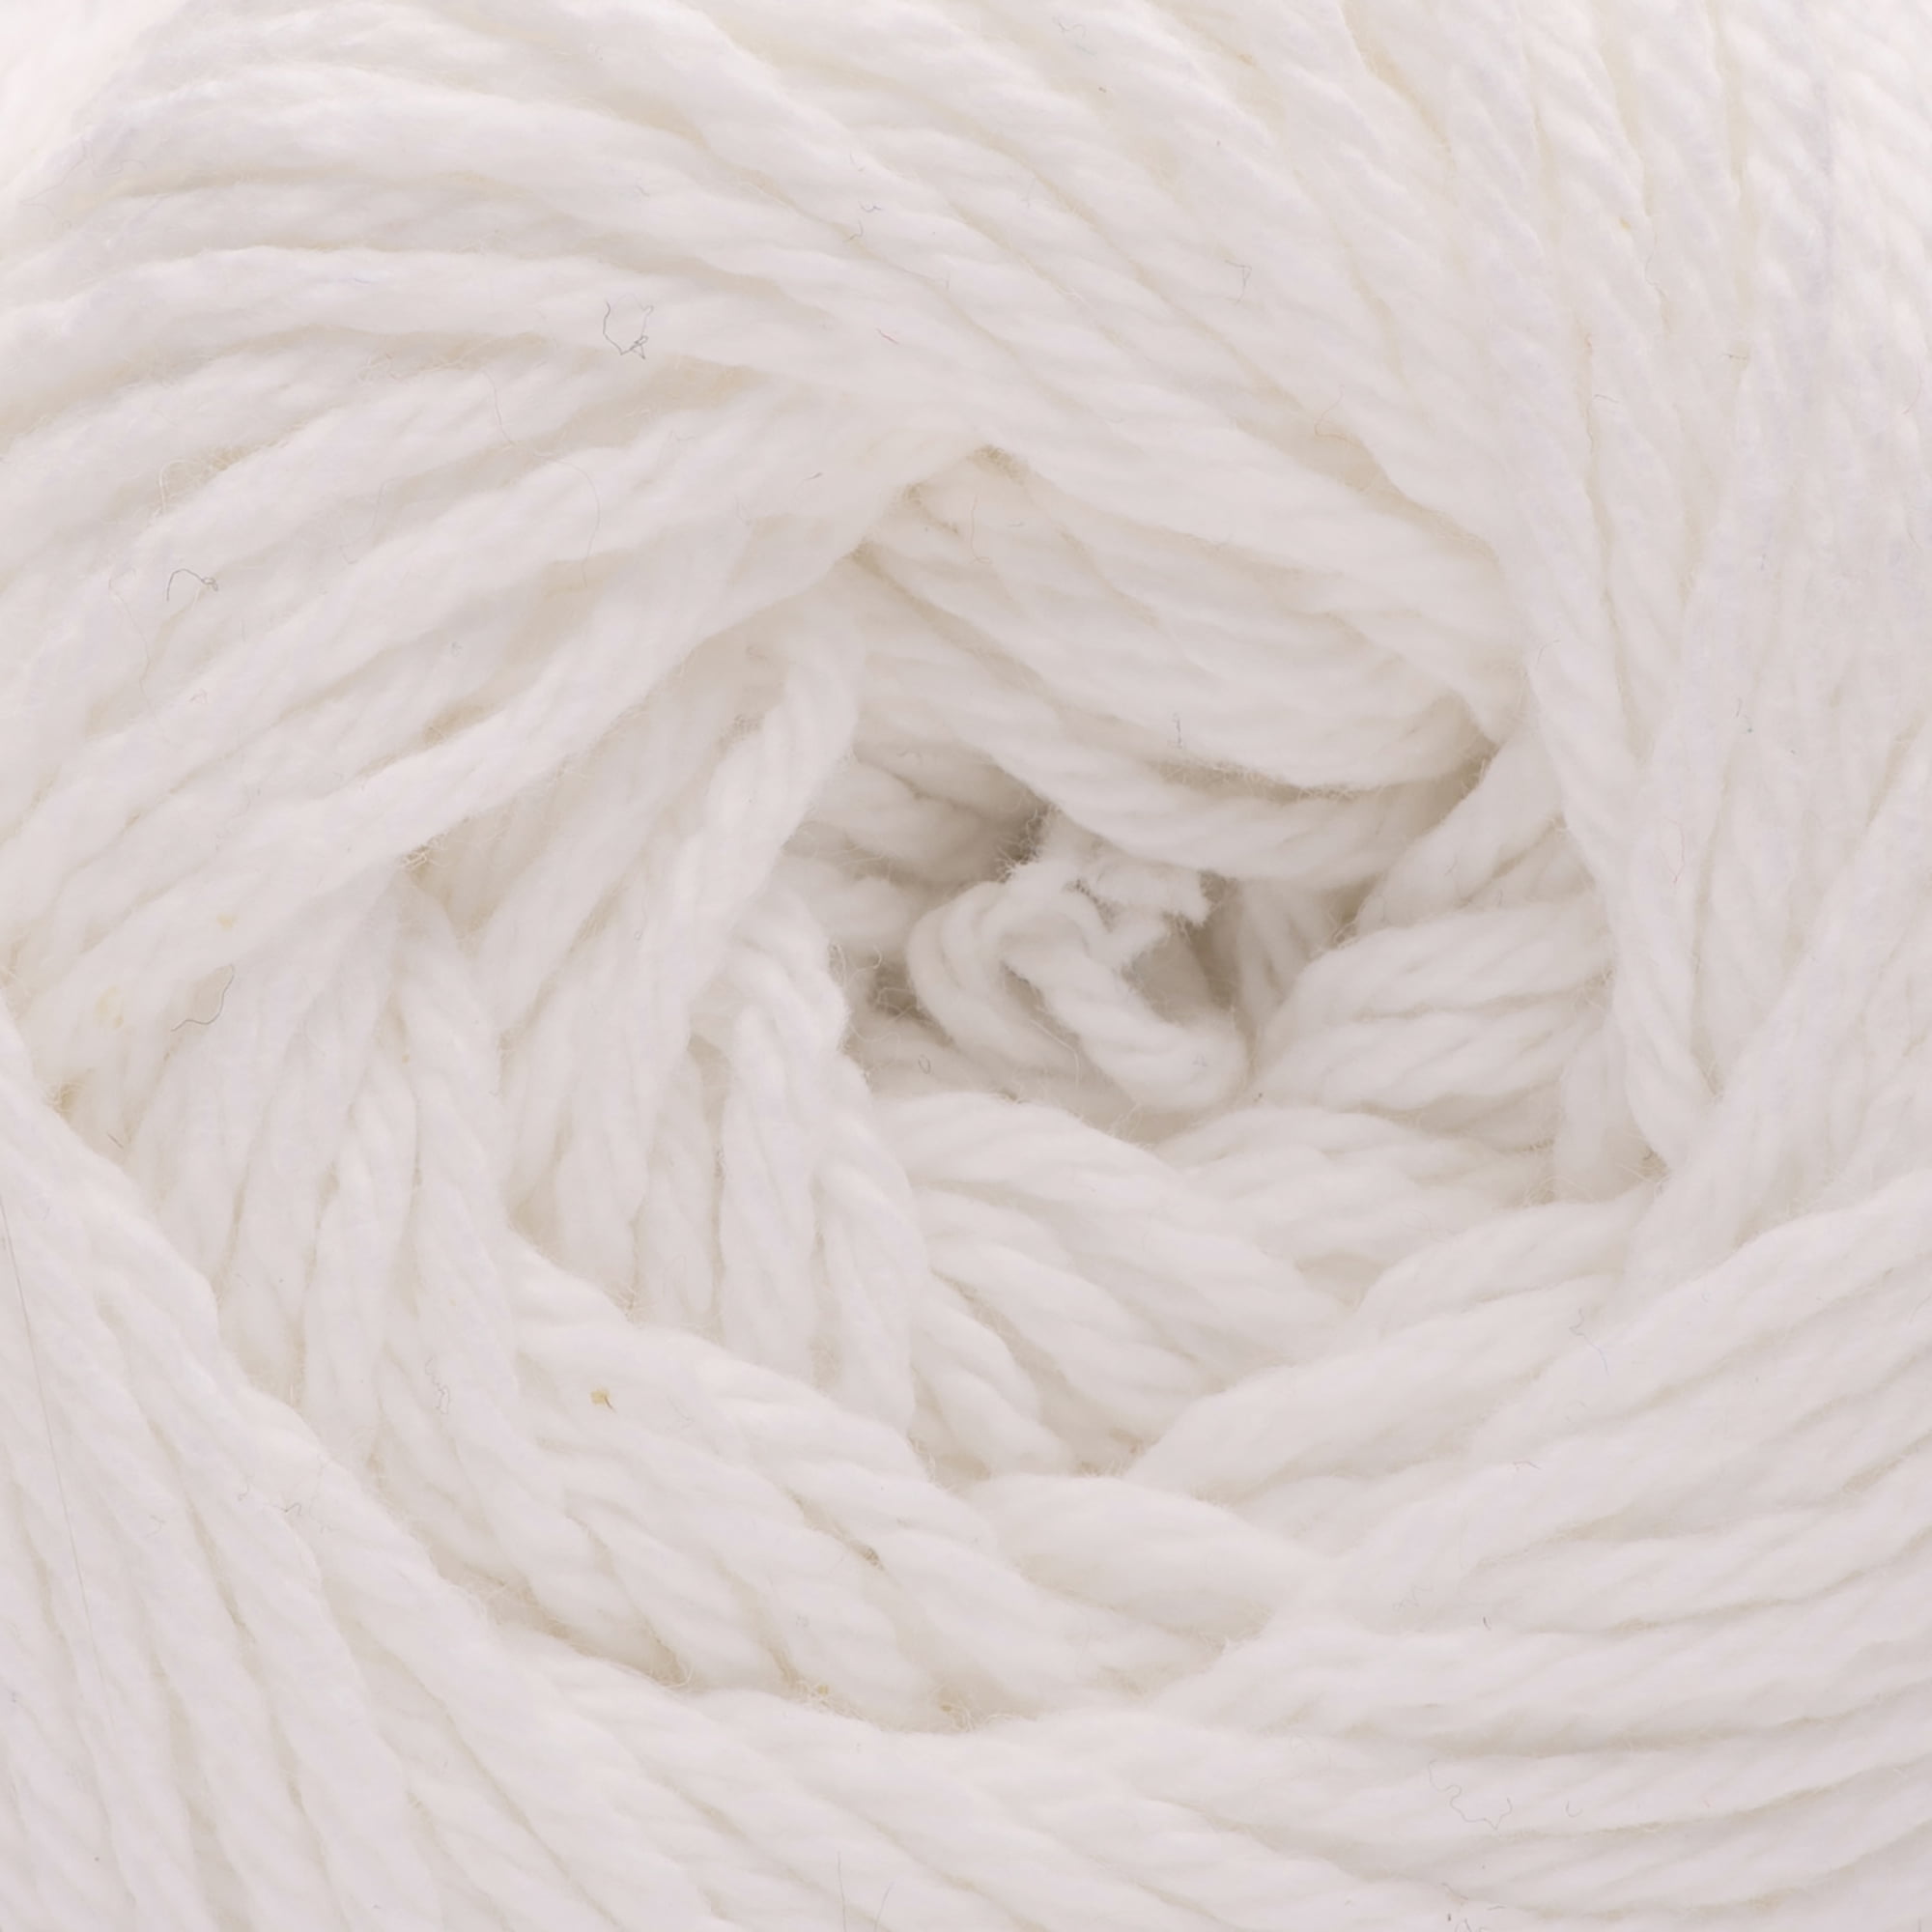 Creativity Street Cotton 4-Ply Heavy Warp Yarn Cone, 800 Yard, Natural  Creamy White